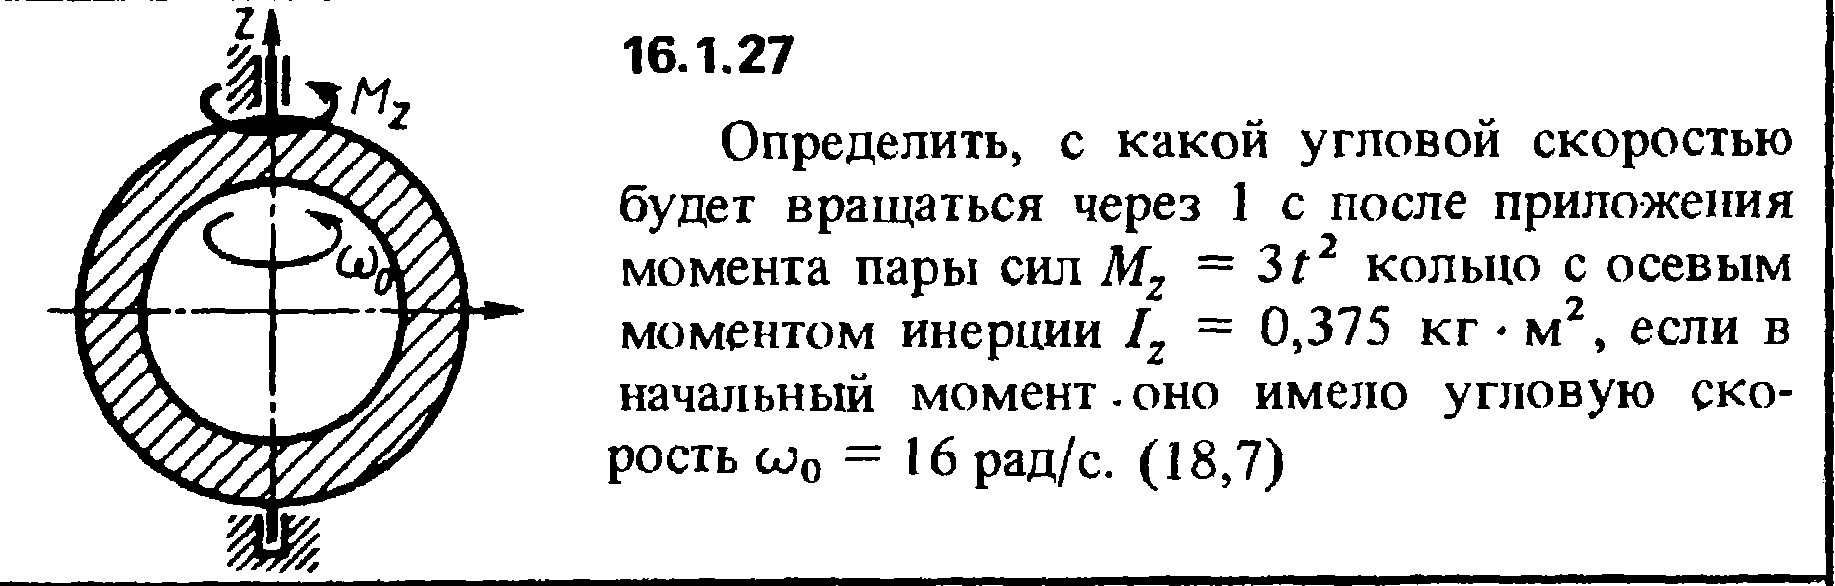 Решение задачи 16.1.27 из сборника Кепе О.Е. 1989 года